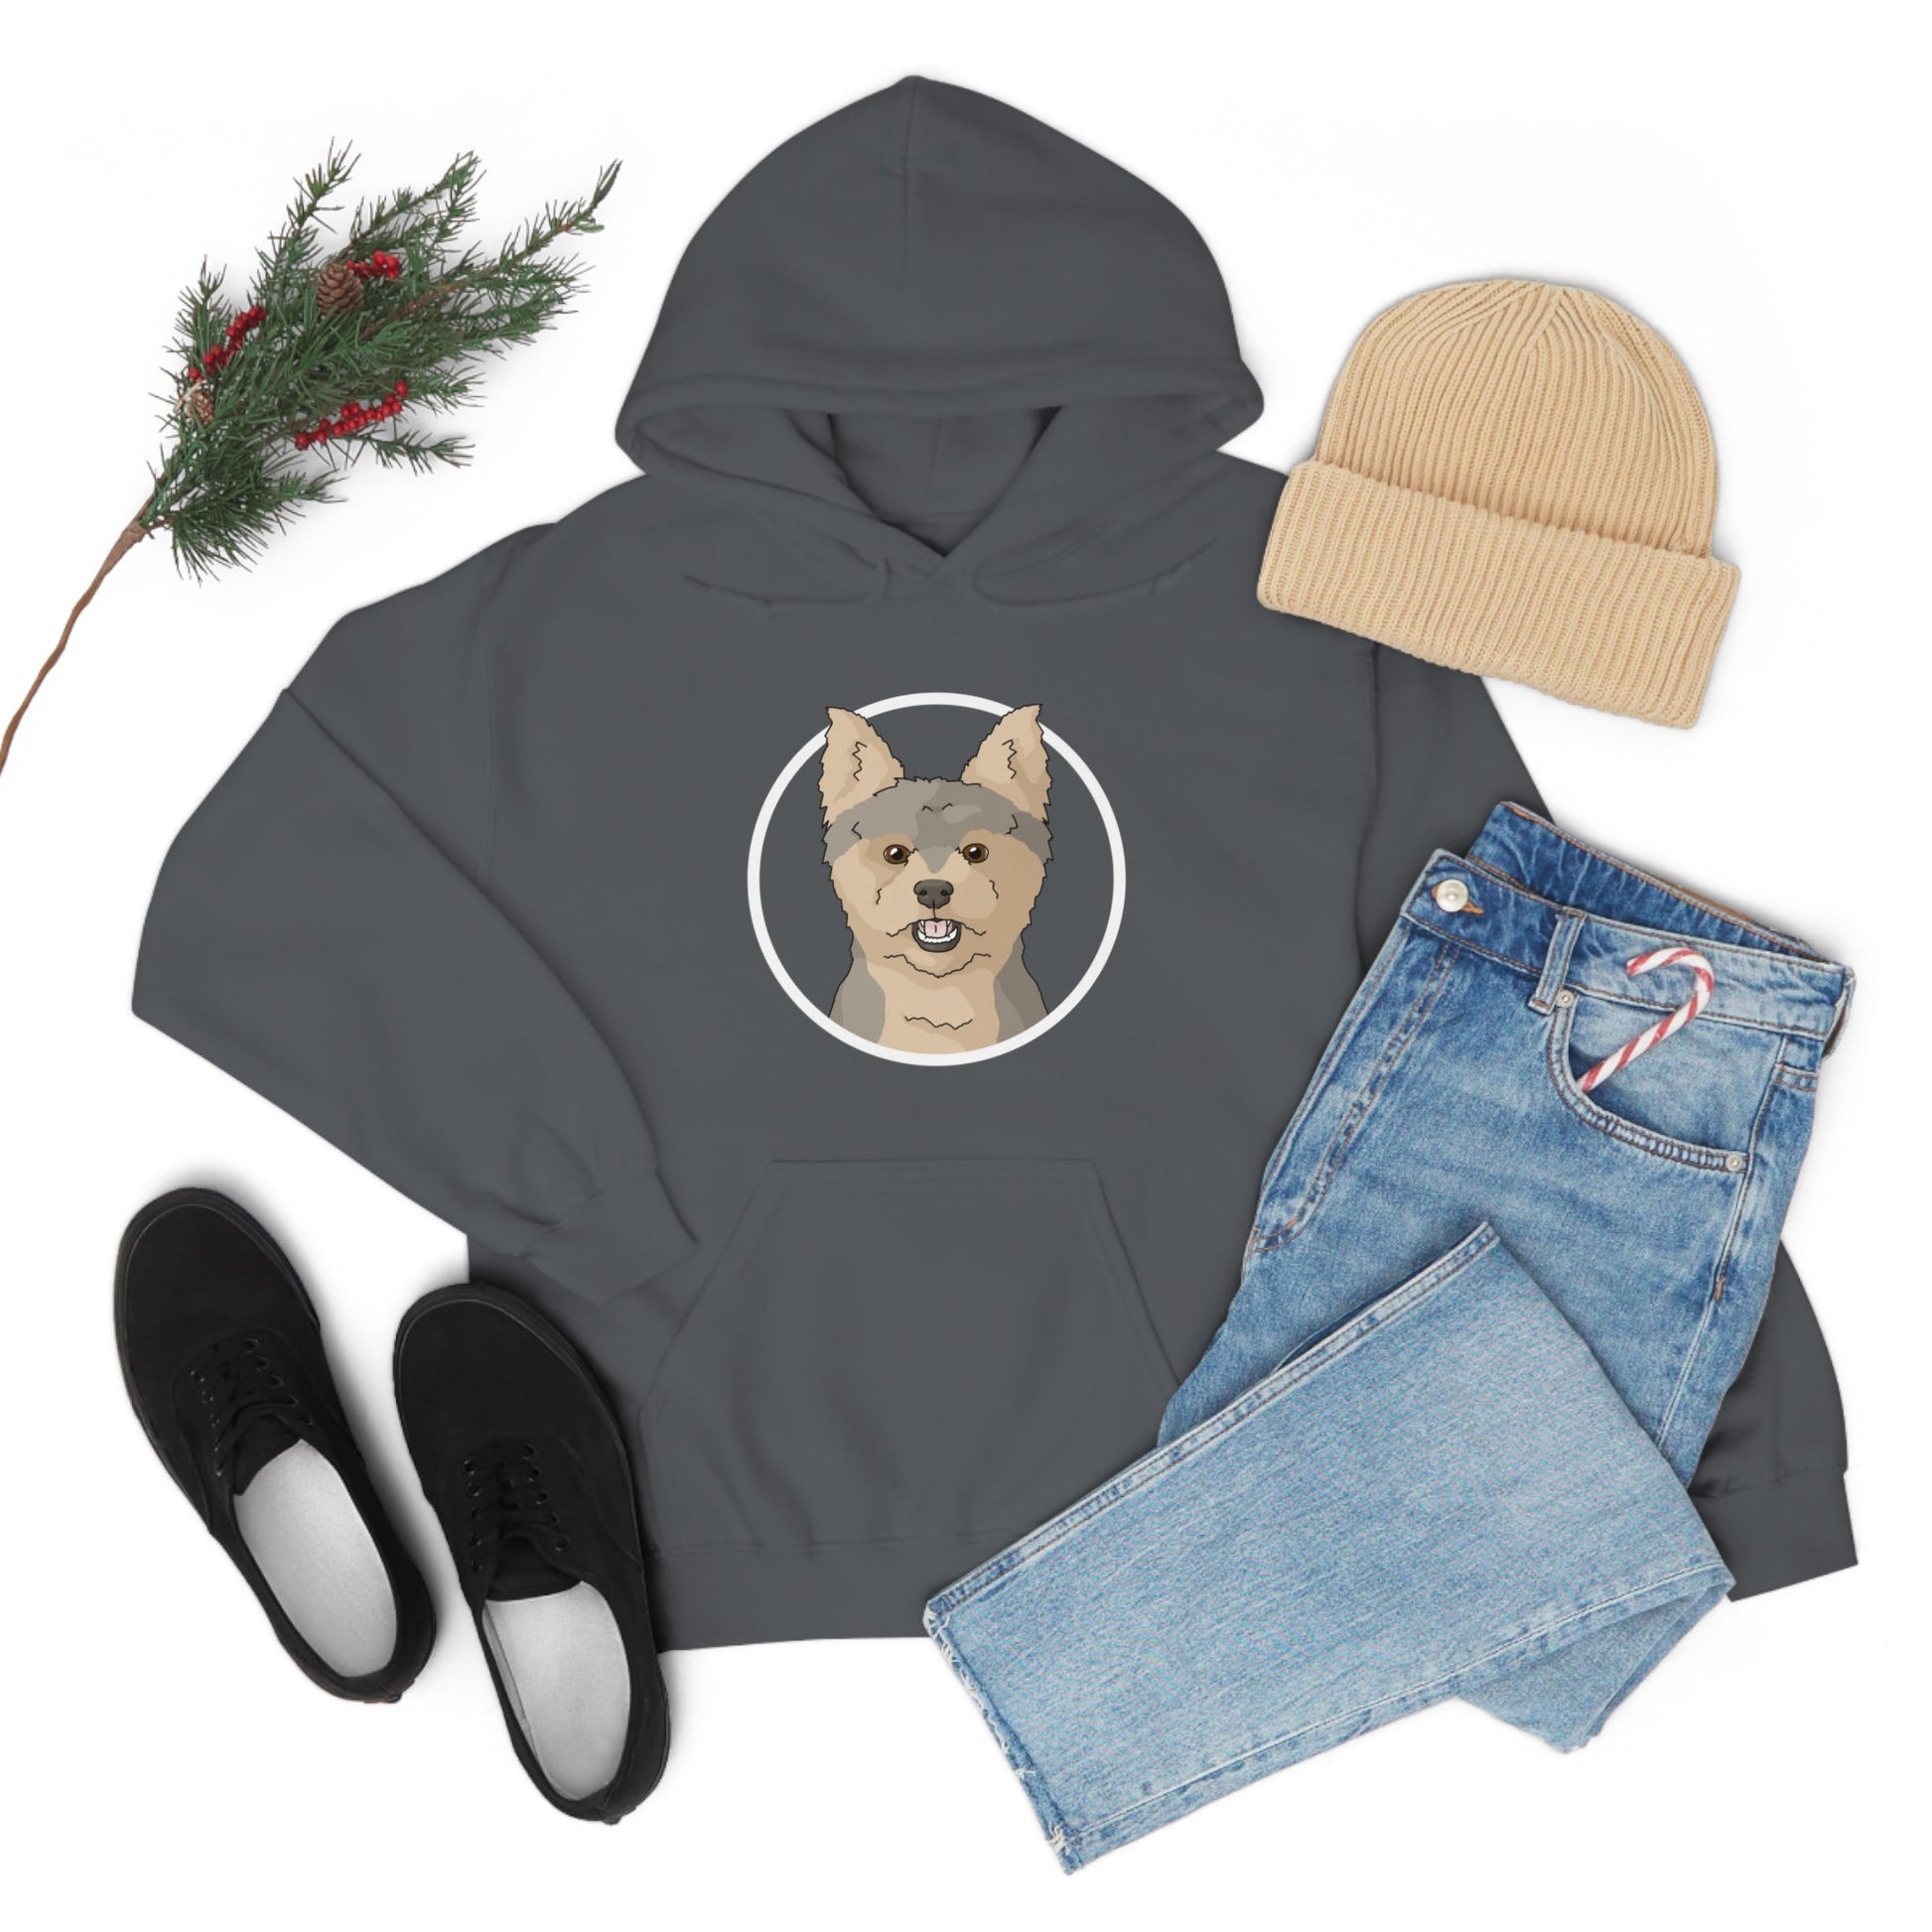 Yorkshire Terrier Circle | Hooded Sweatshirt - Detezi Designs-19275088596079507278